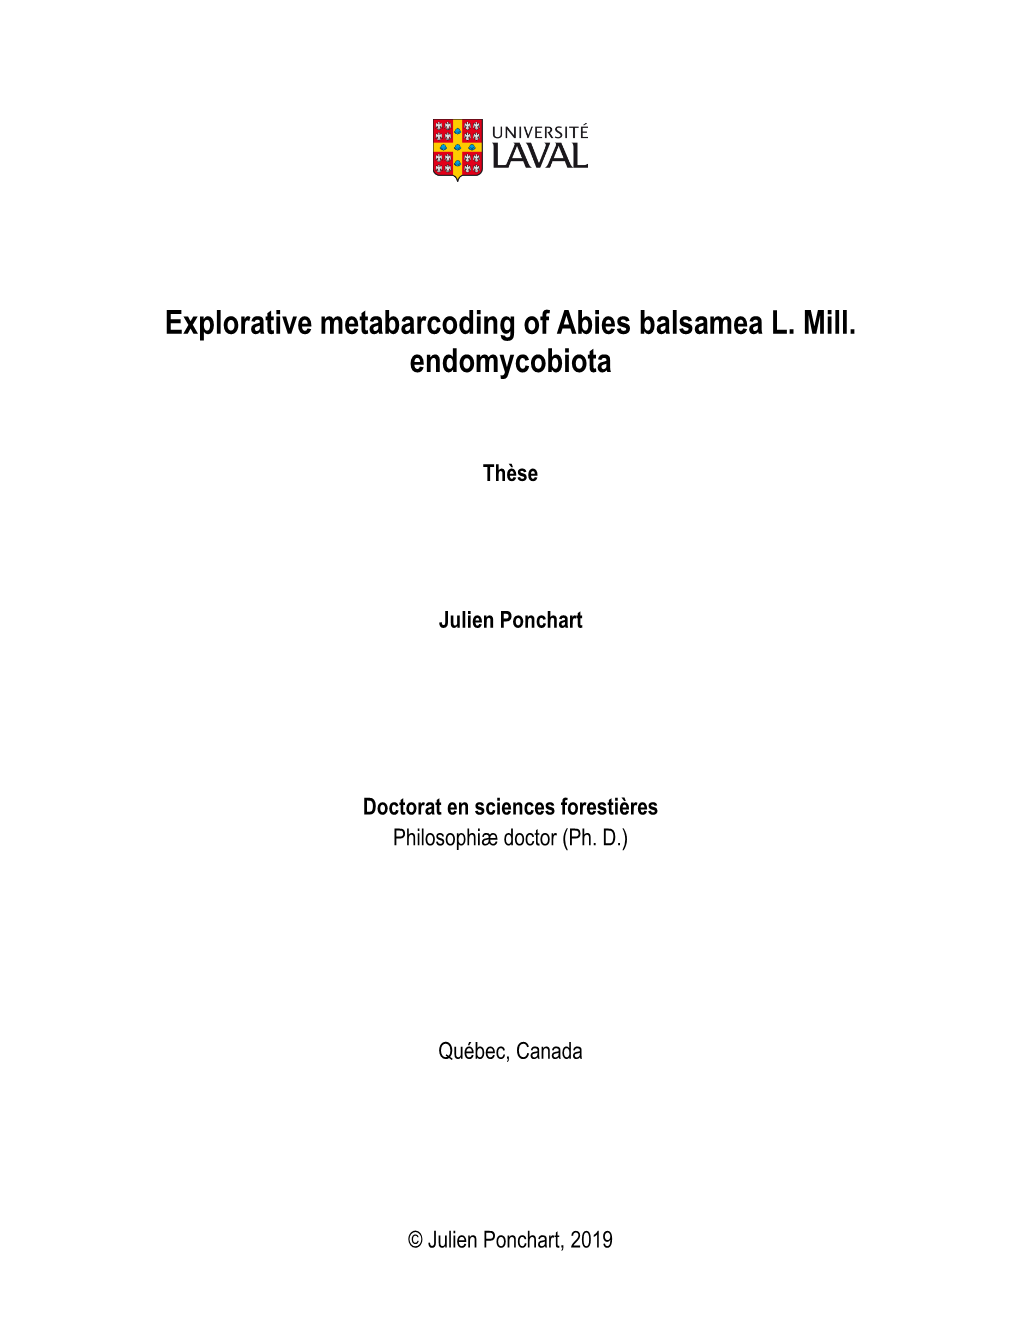 Explorative Metabarcoding of Abies Balsamea L. Mill. Endomycobiota